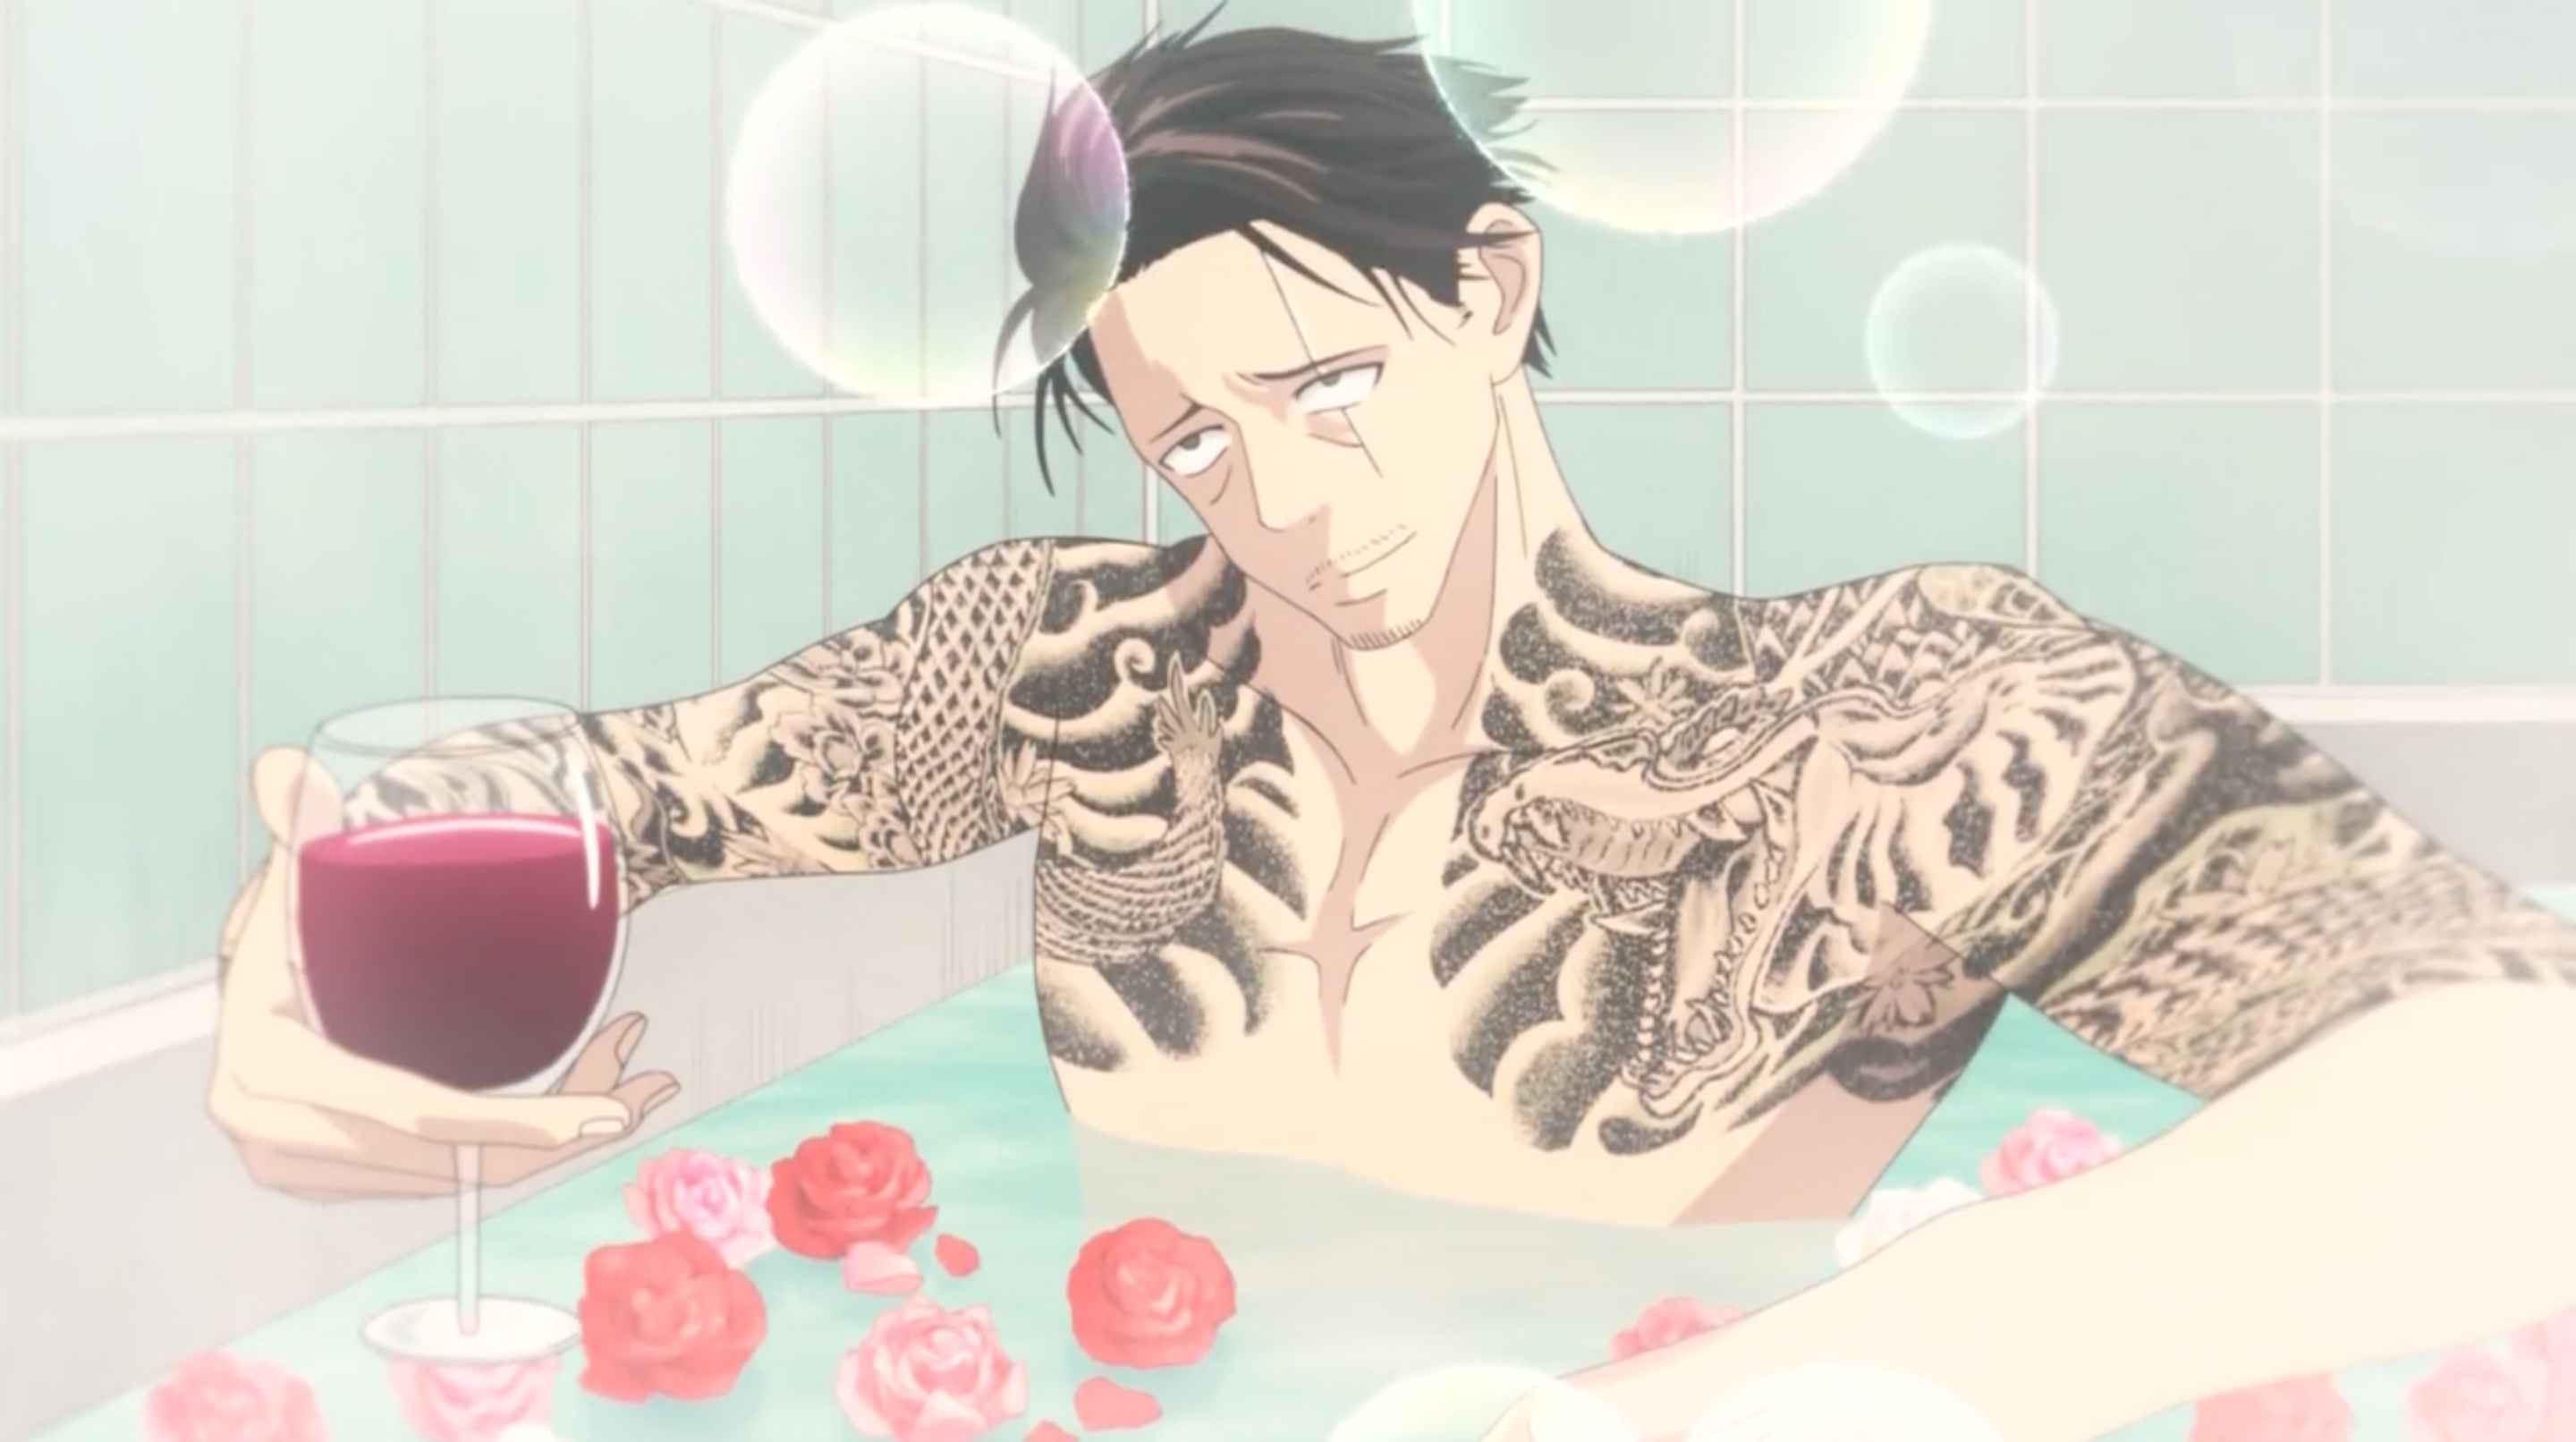 The Way Of The Househusband - Kenjiro Tsuda in a bath